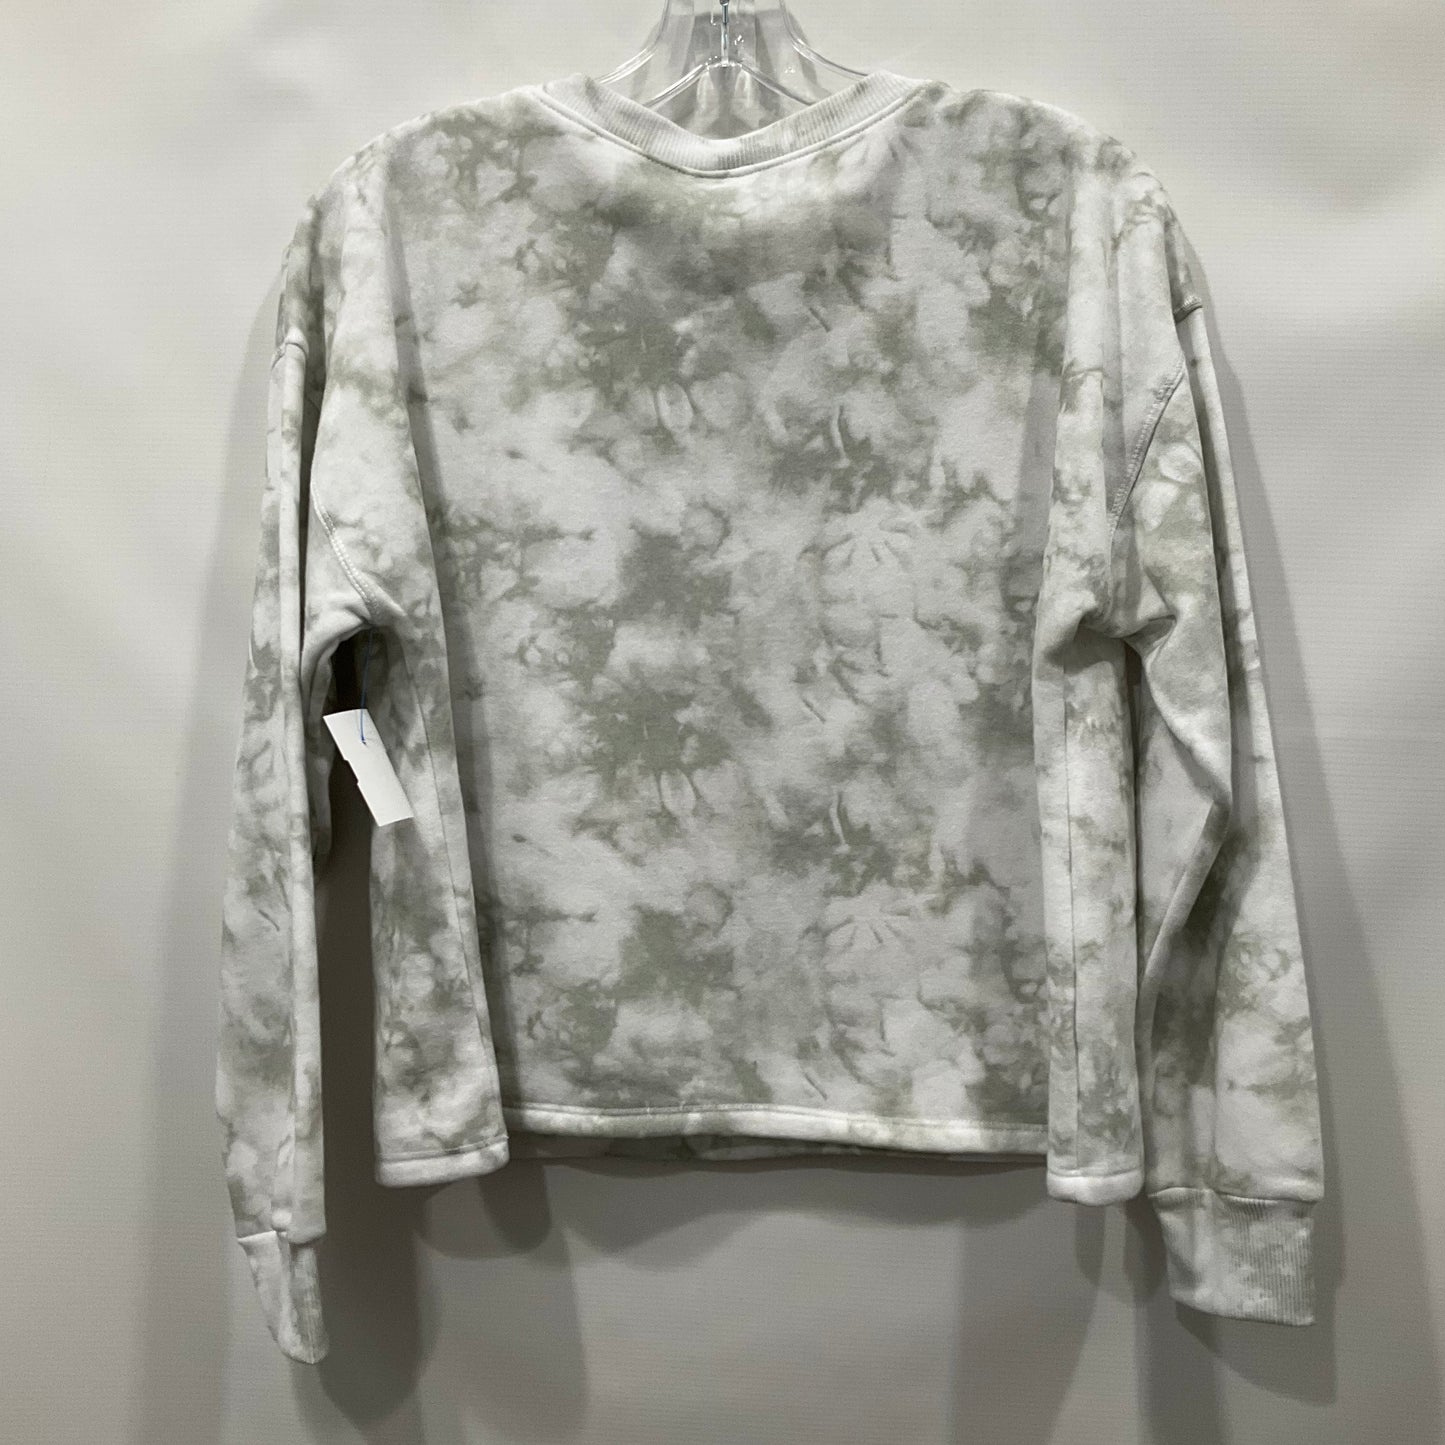 Sweatshirt Crewneck By Disney Store  Size: M